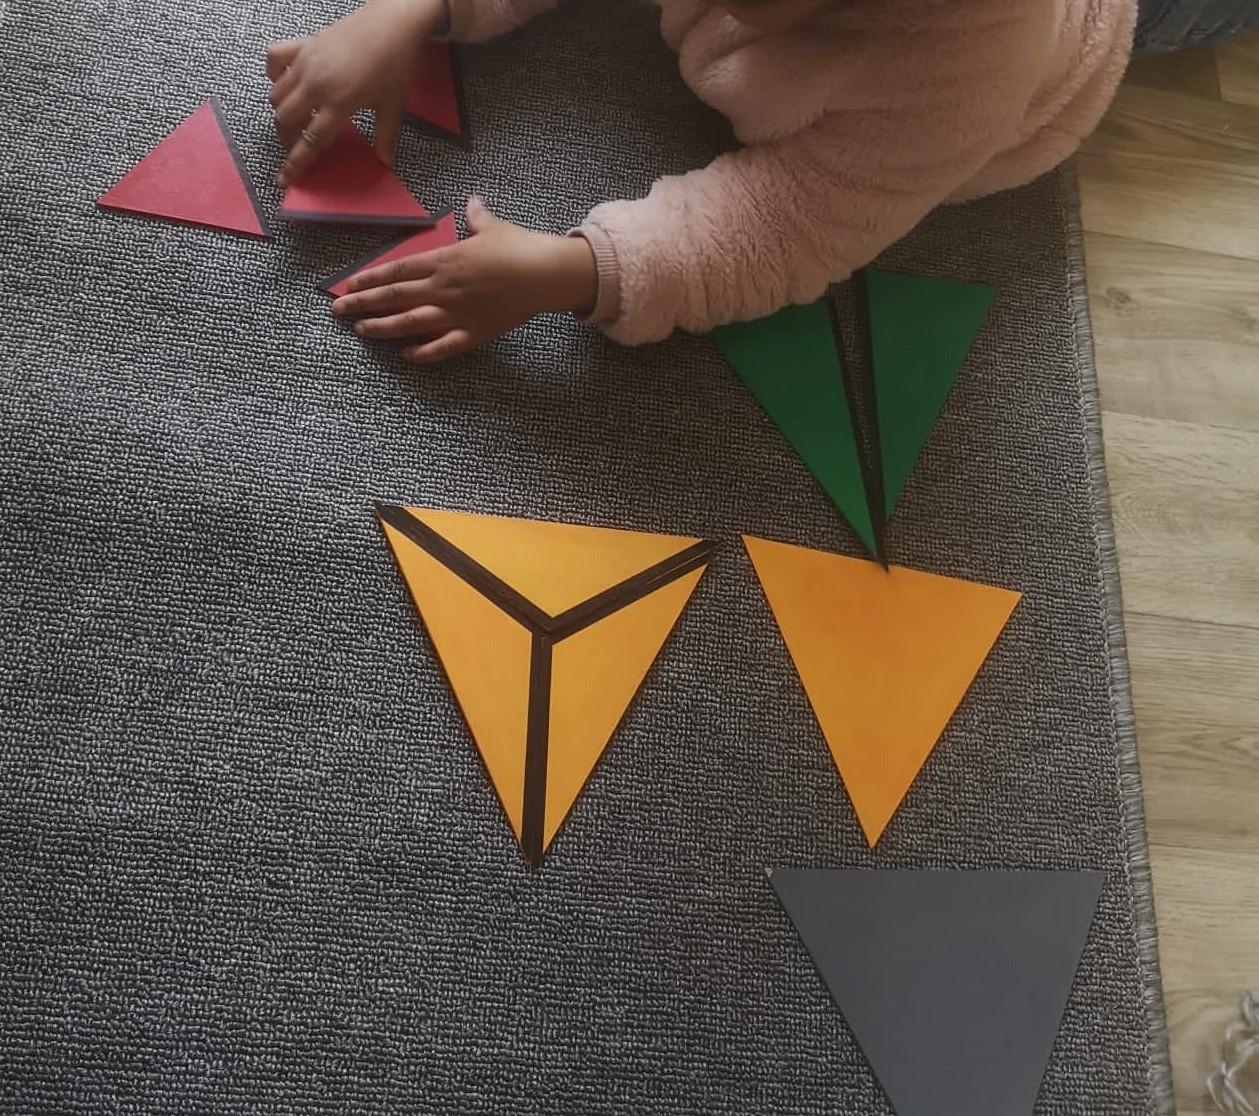 Les triangles 1